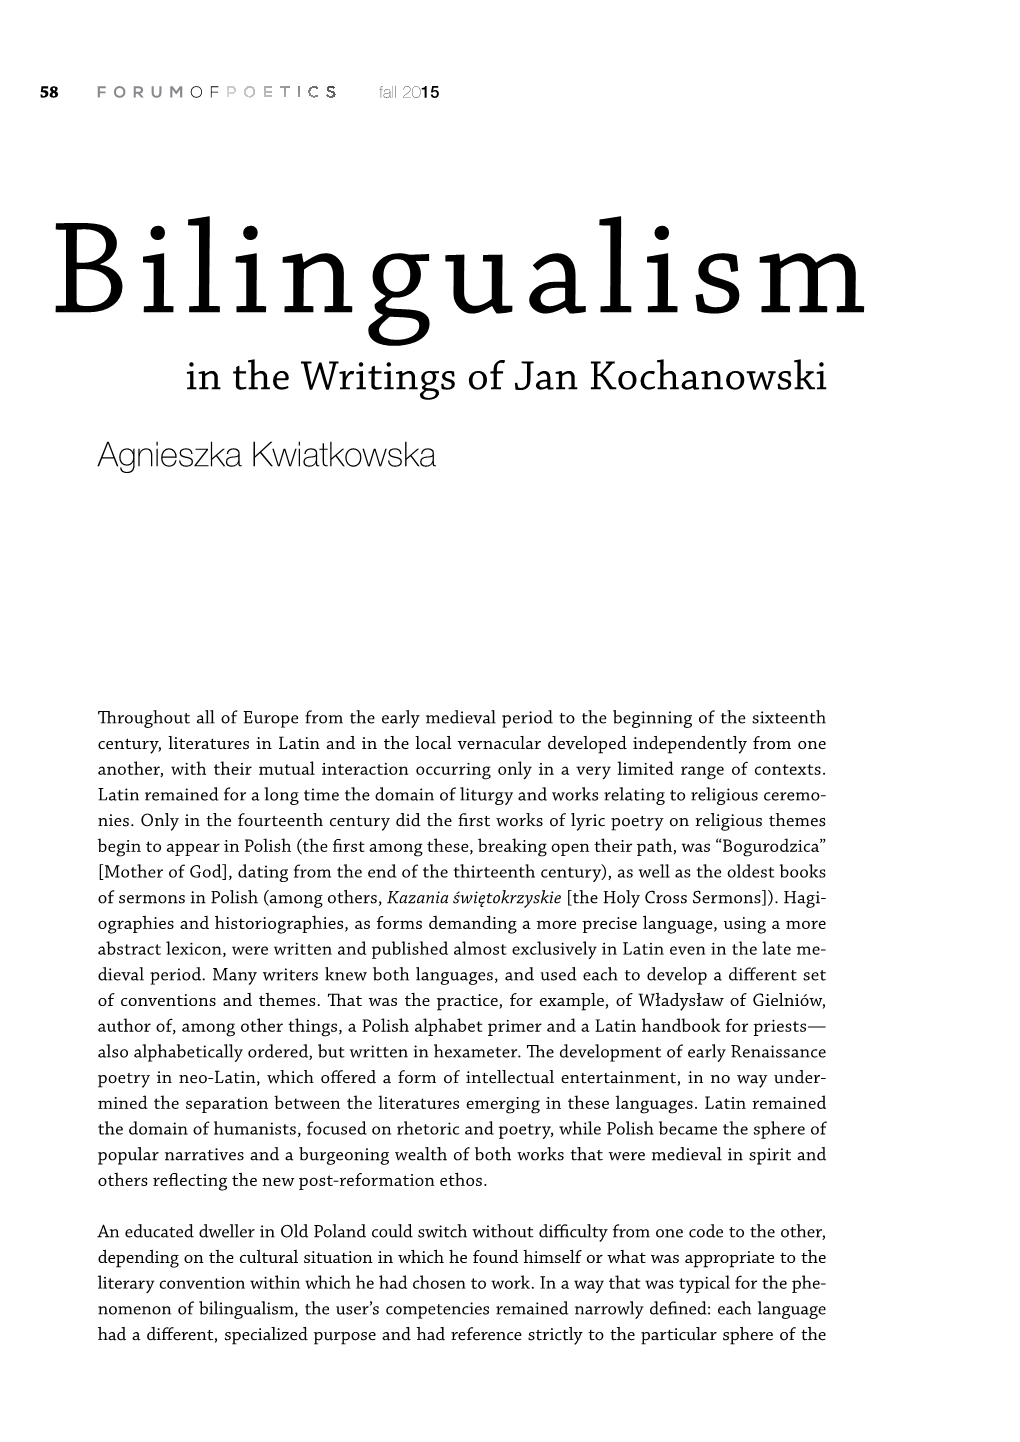 Bilingualism in the Writings of Jan Kochanowski